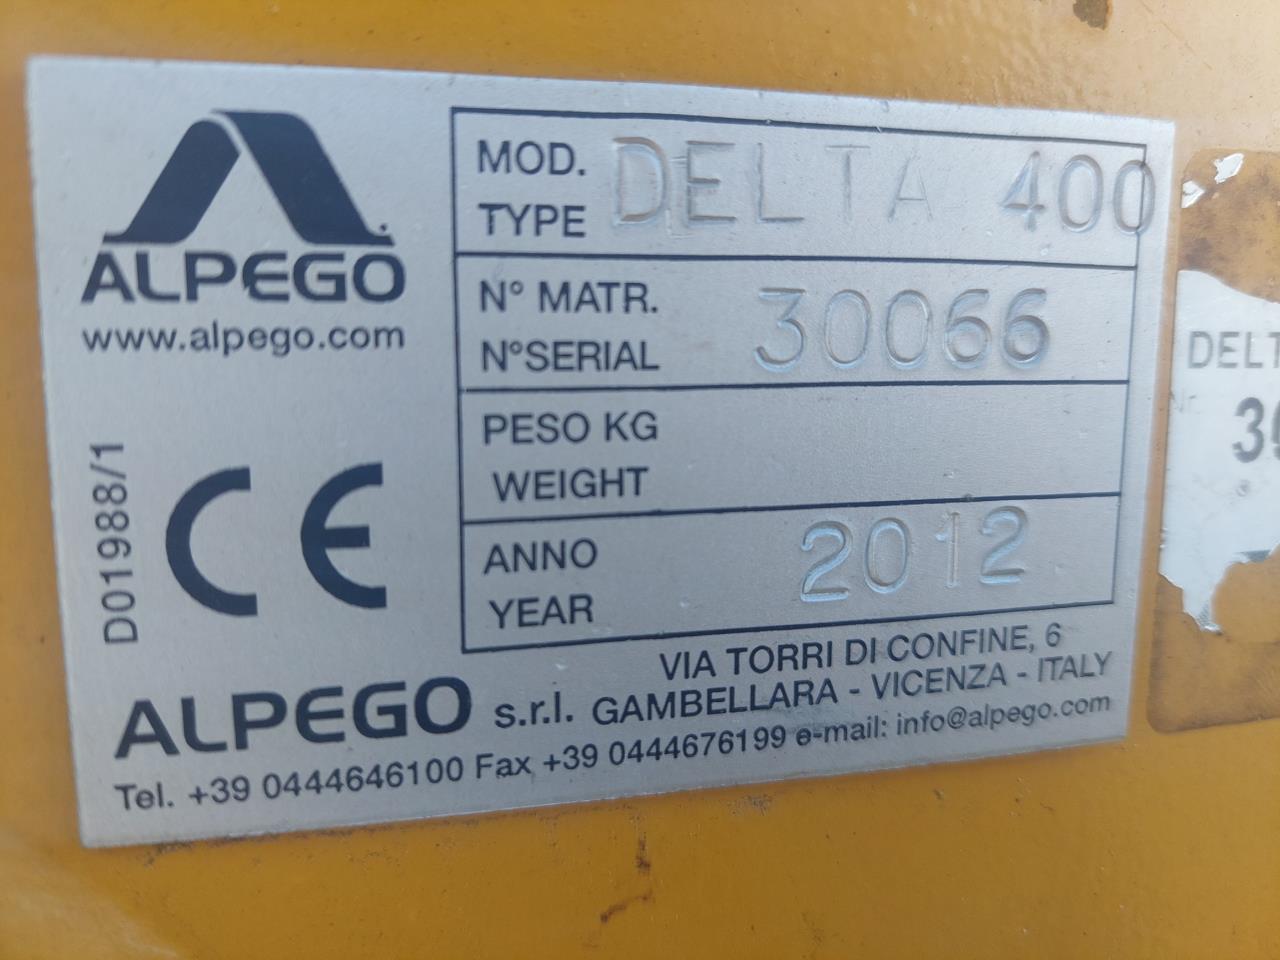 Alpego Delta 400